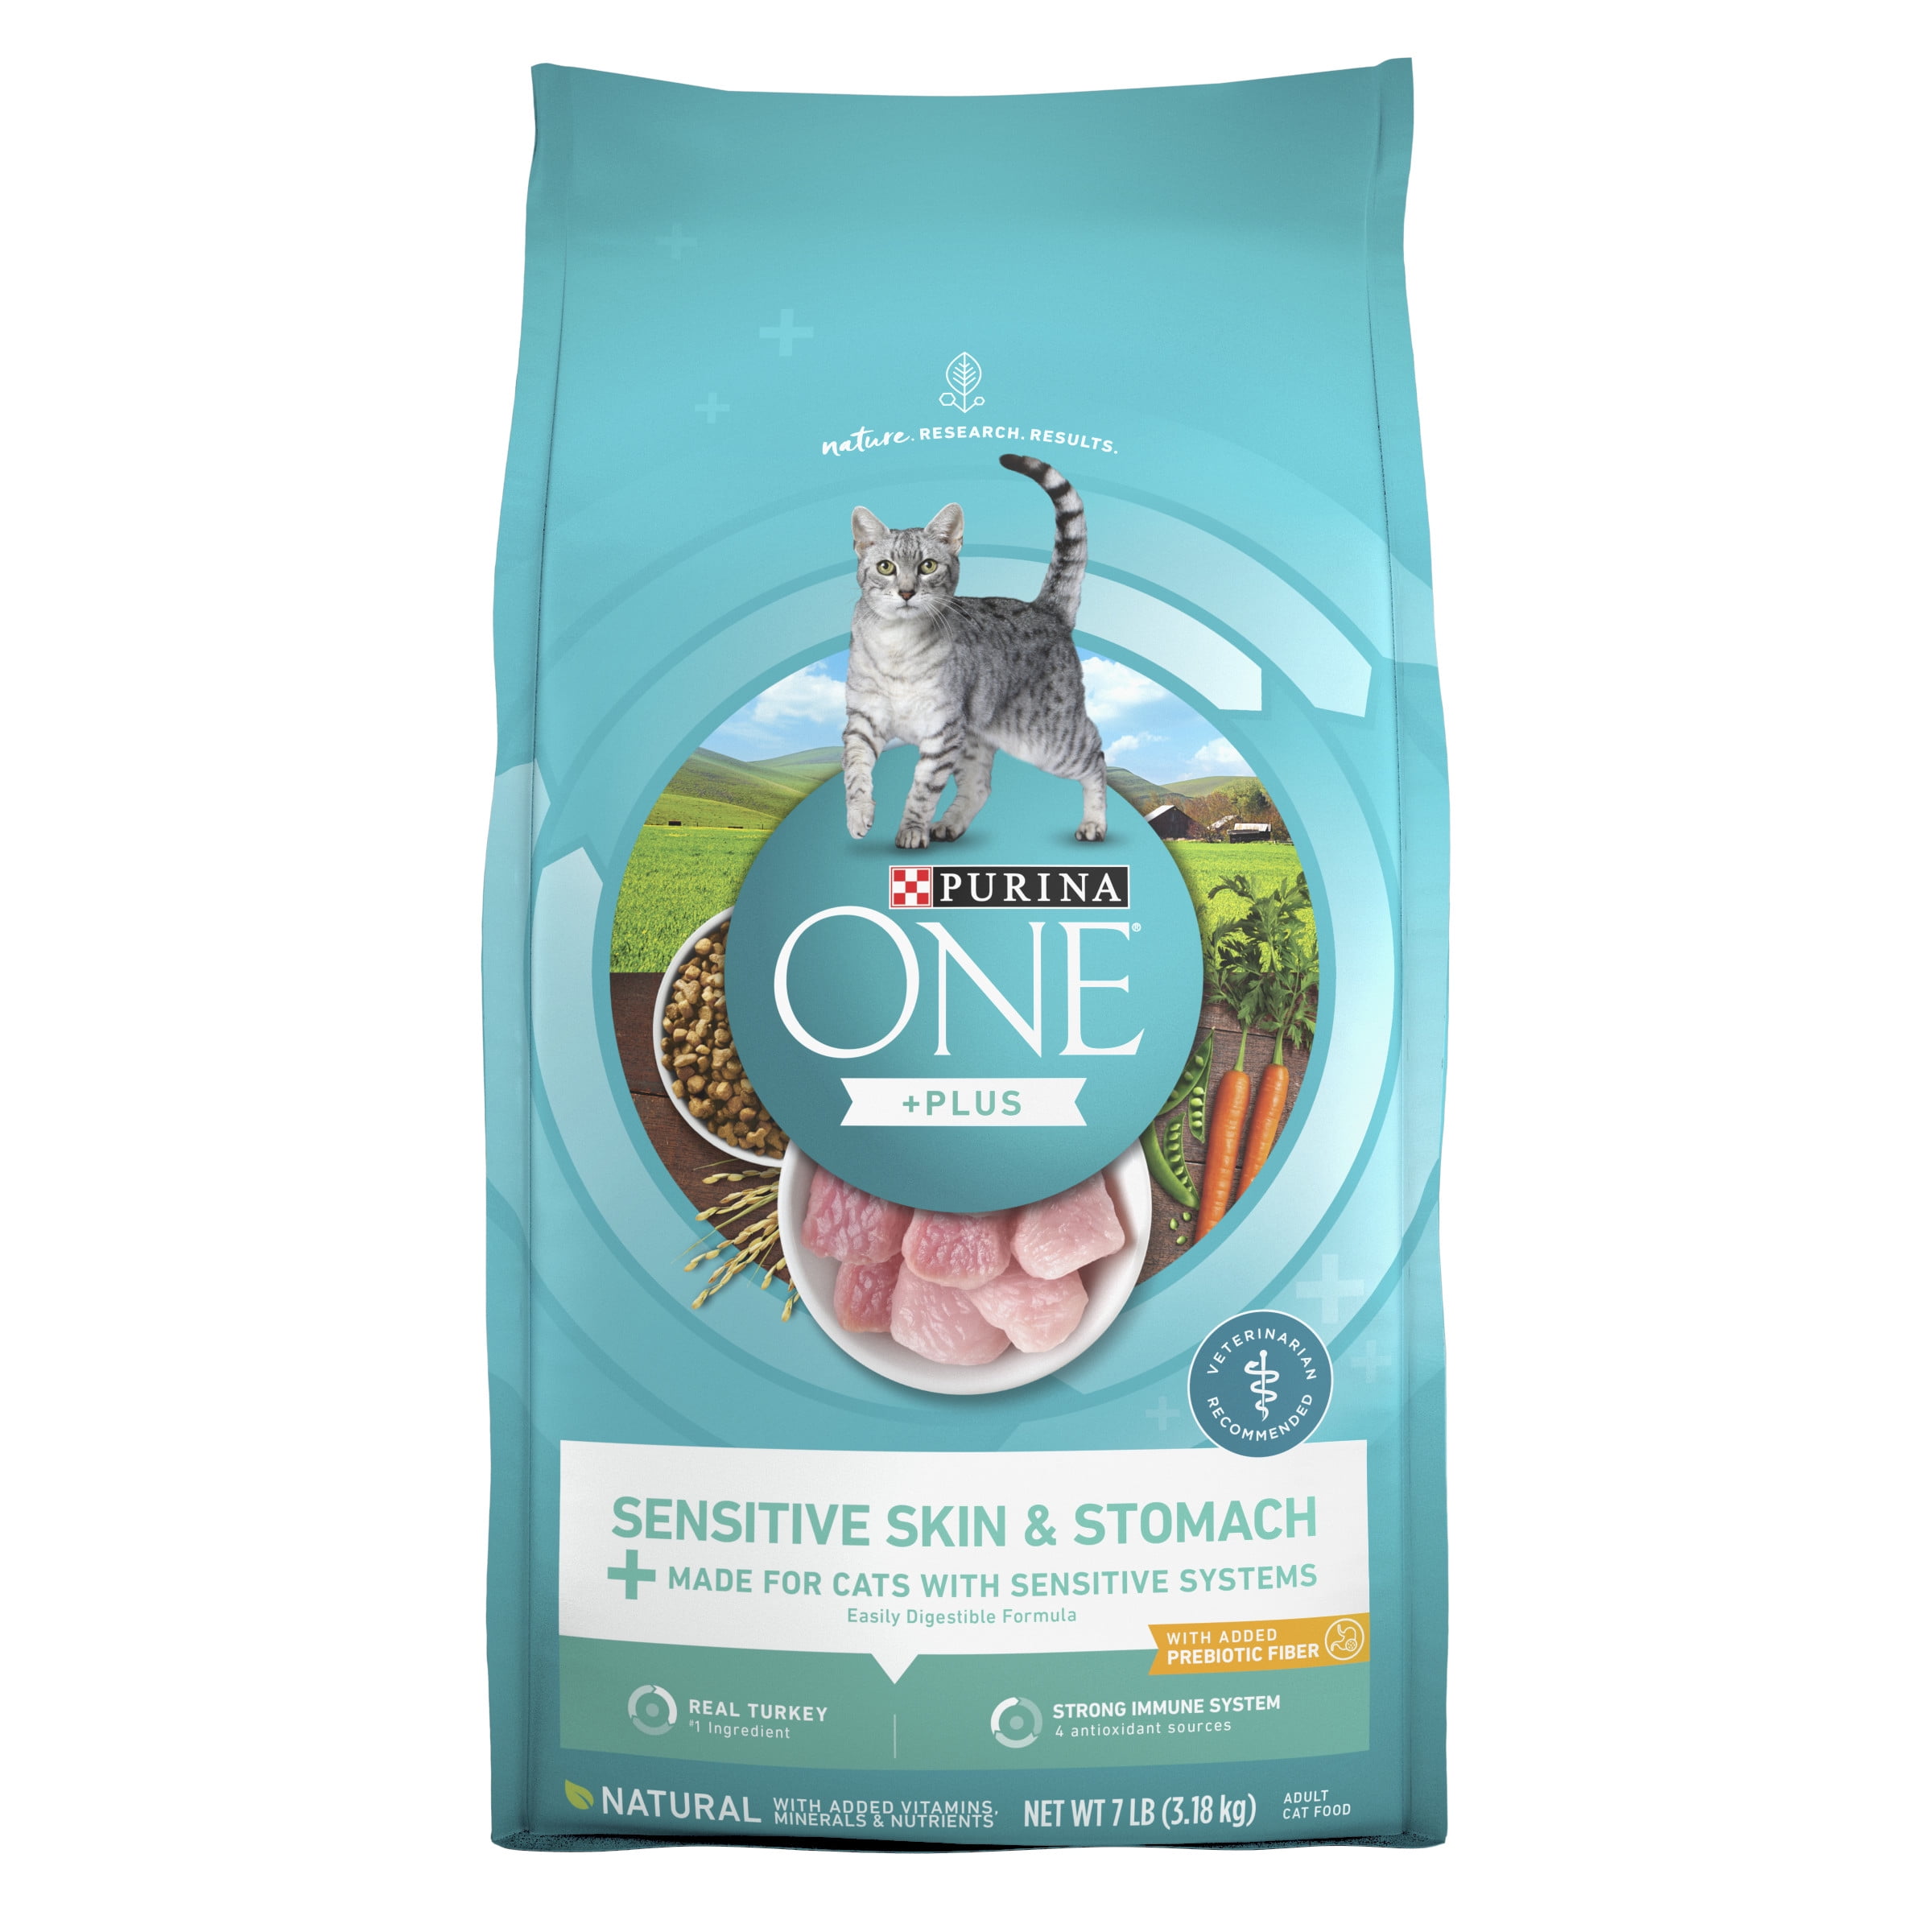 Purina One +Plus Sensitive Skin and Stomach Dry Cat Food Tuekey, 7 lb Bag